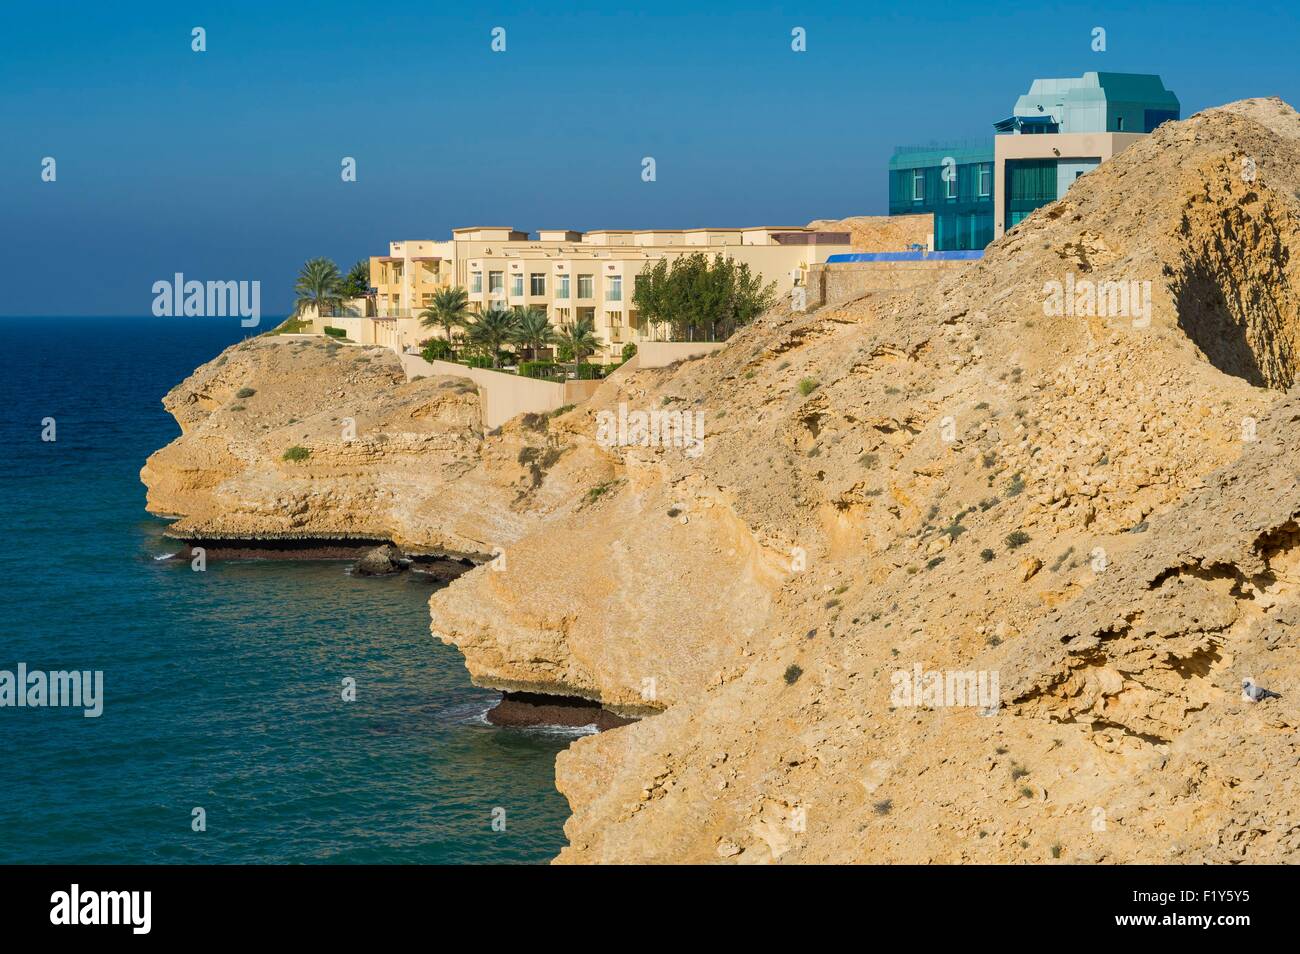 Oman, Muscat, Qantab, Barr al Jissah Resort, Shangri La hotel Stock Photo